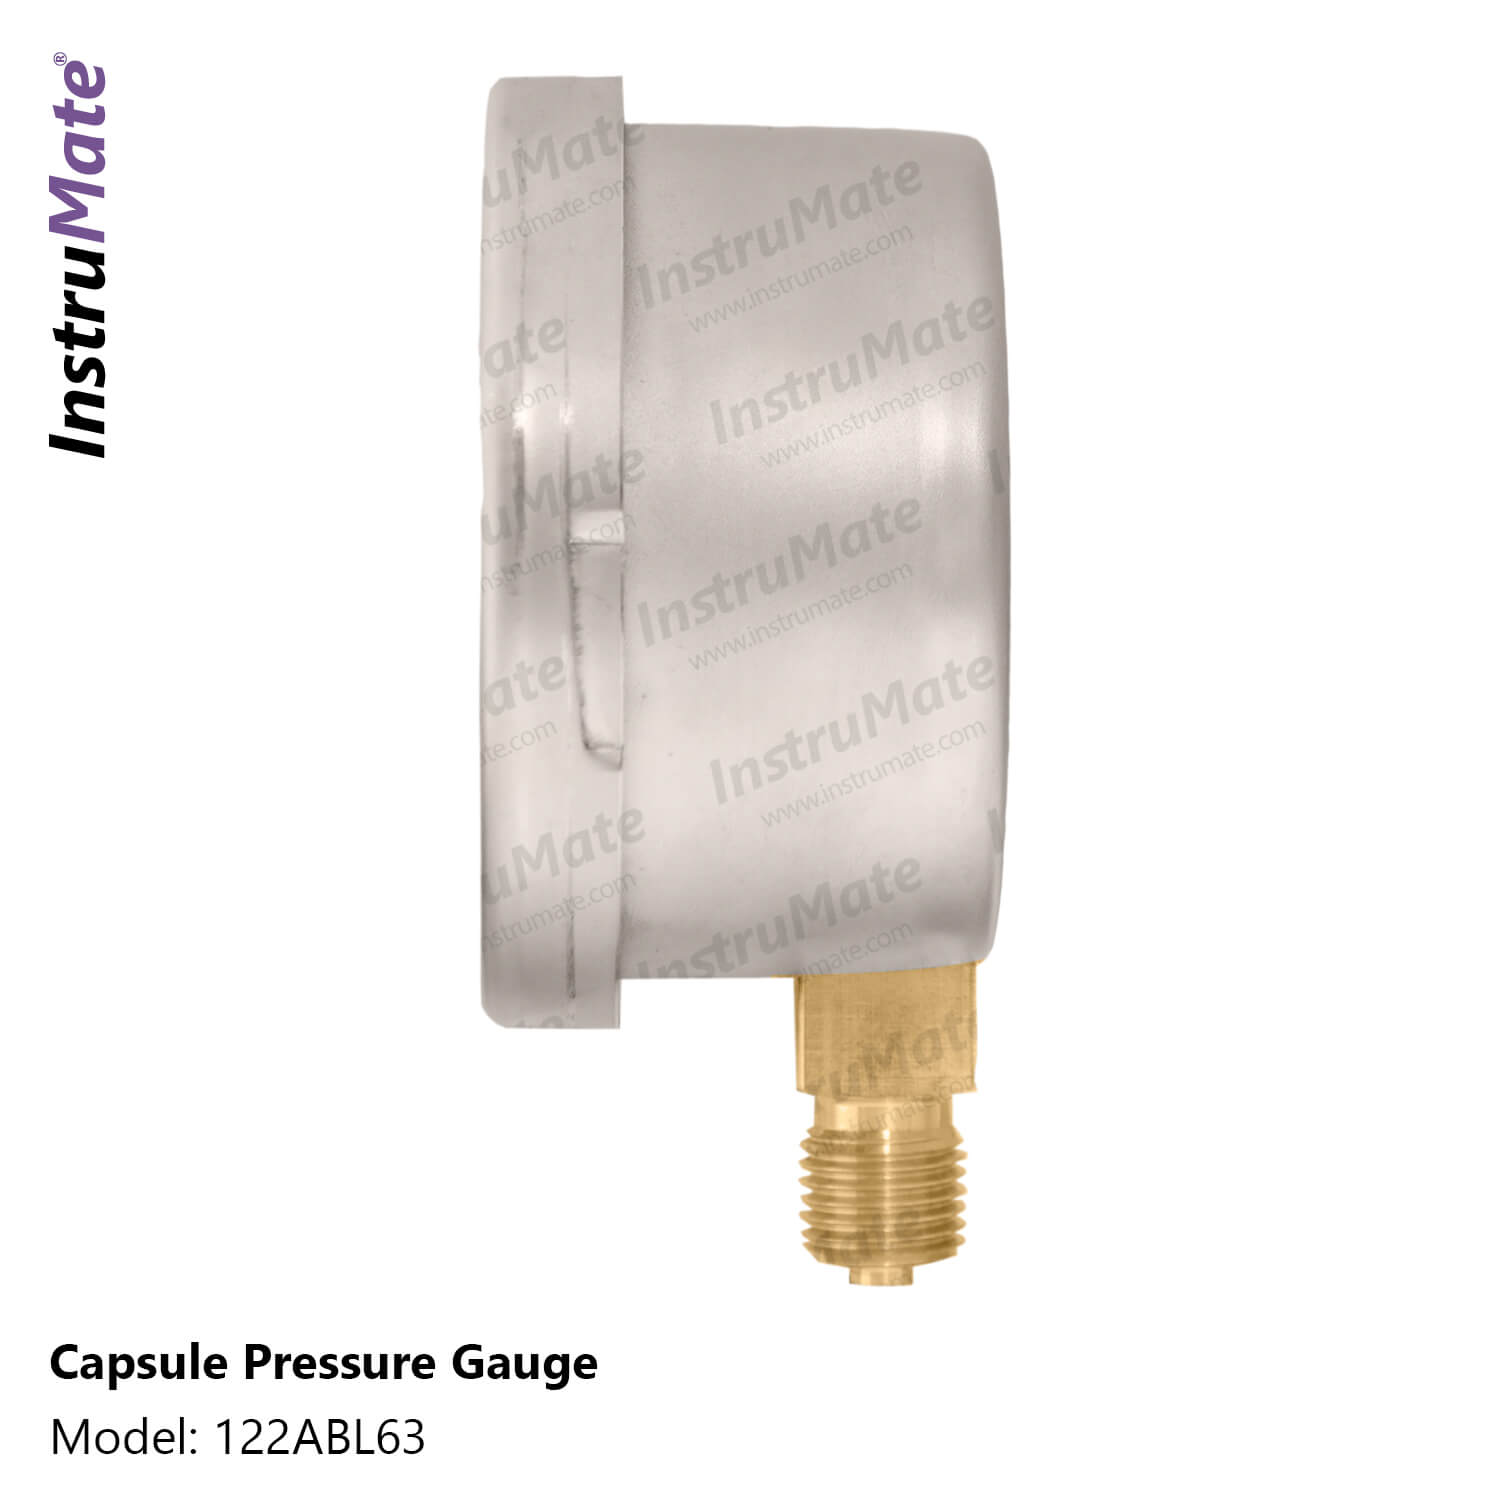 Capsule pressure gauge - 122Ab - InstruMate